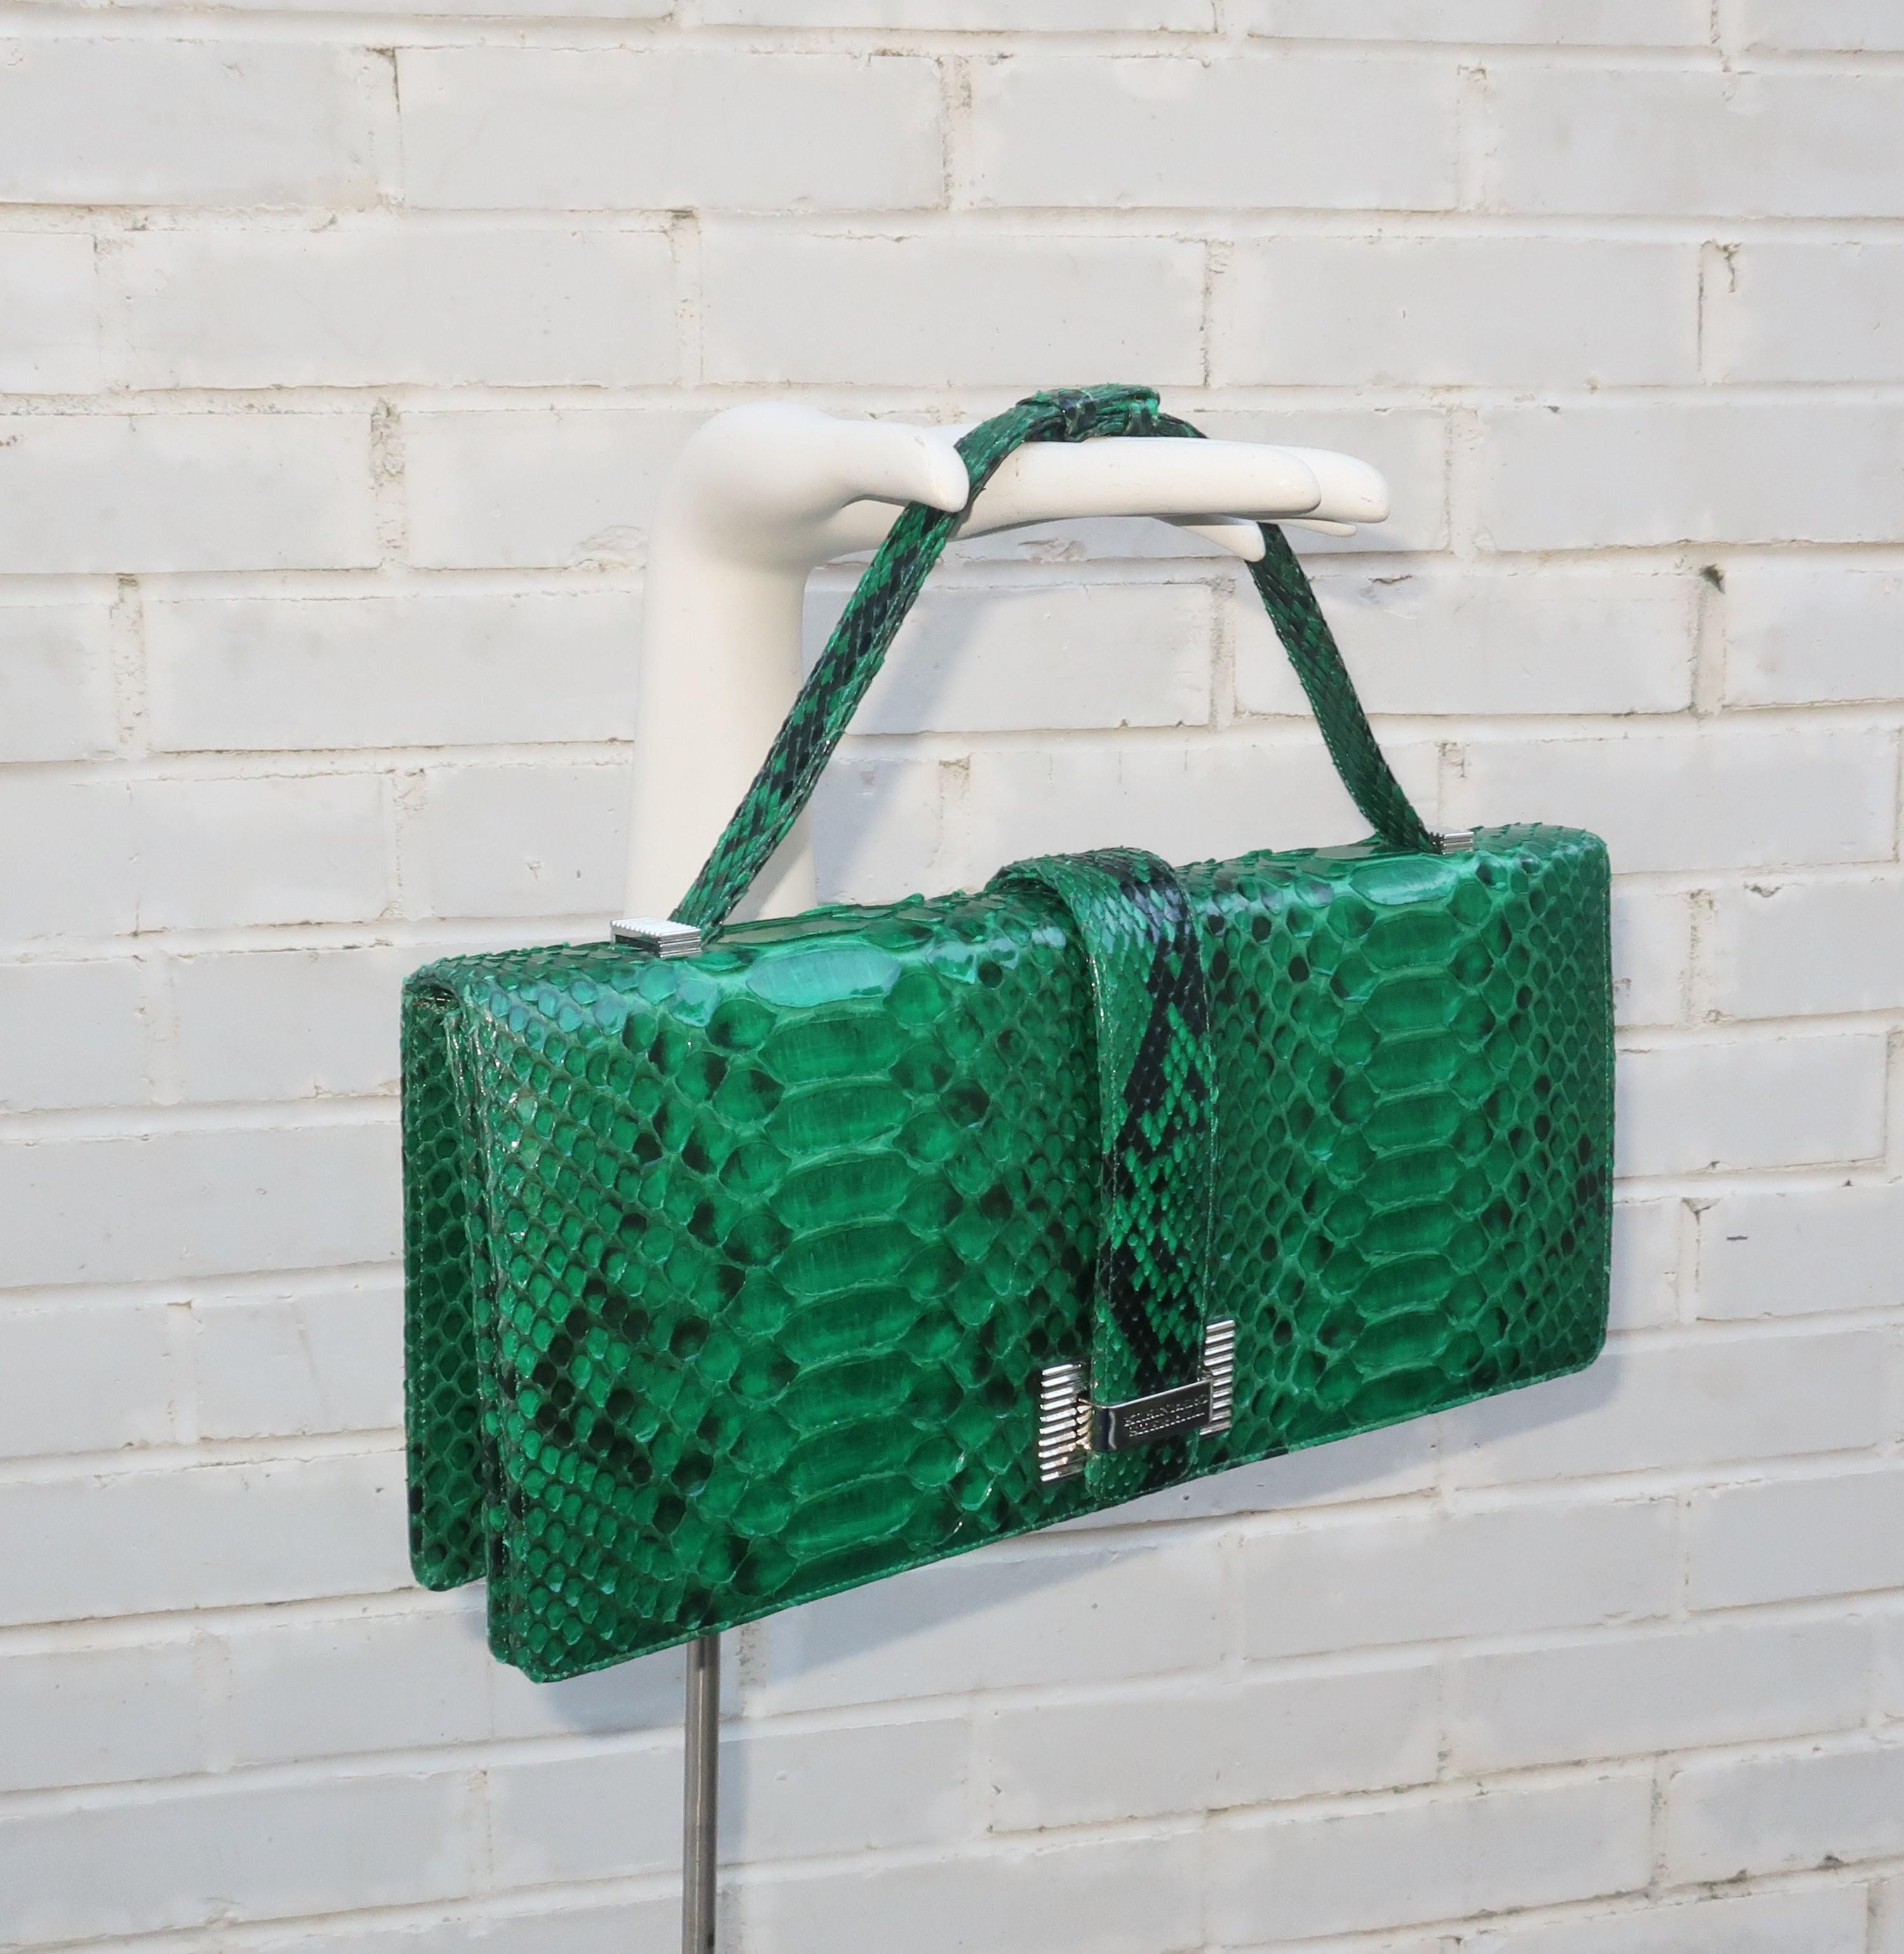 Kleinberg Sherrill Green Snakeskin Clutch Handbag 5